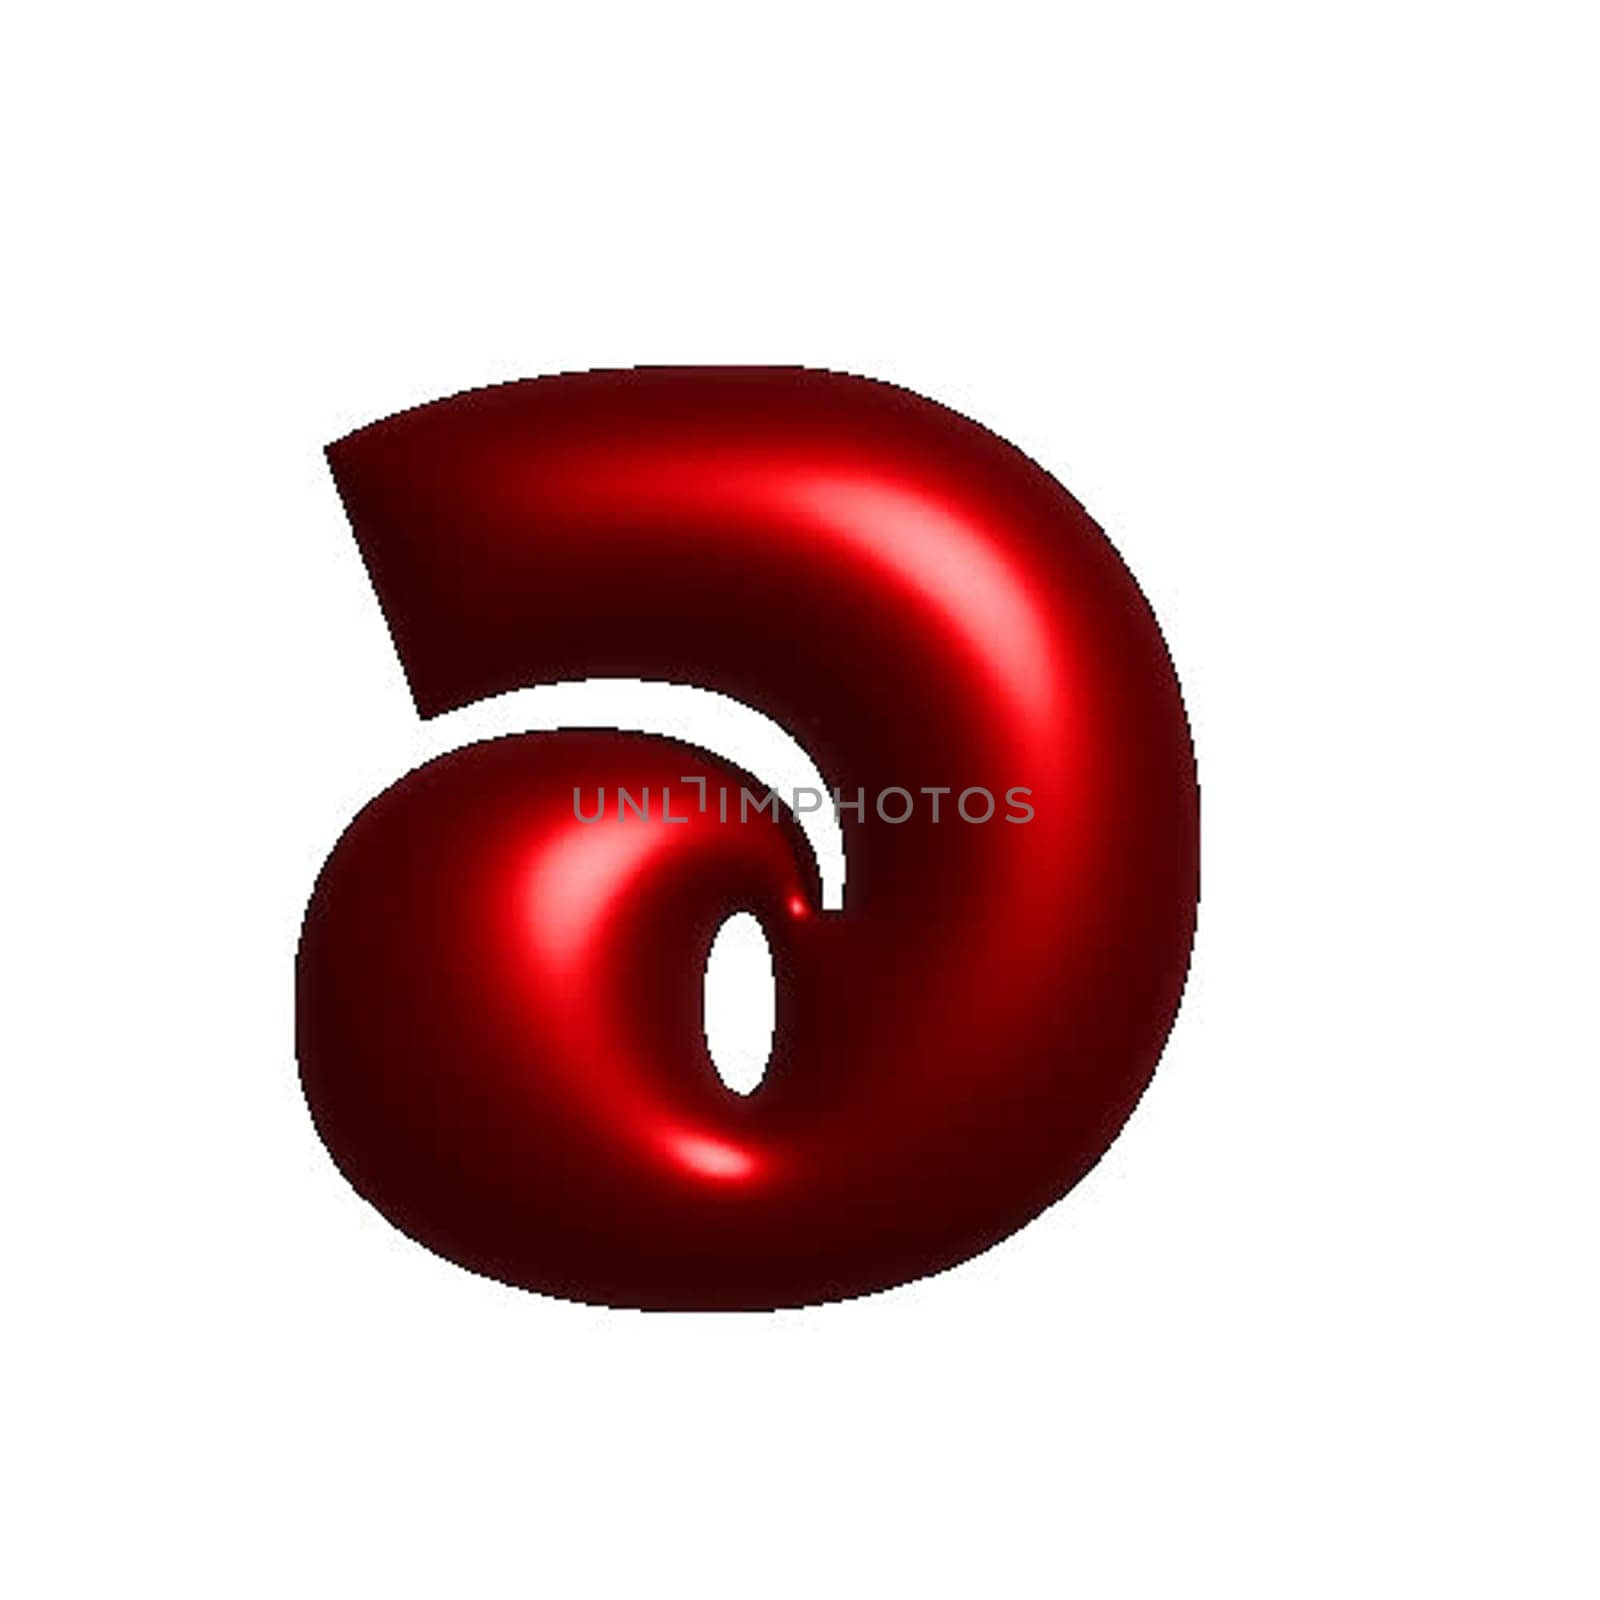 Red shiny metal shiny reflective letter D 3D illustration